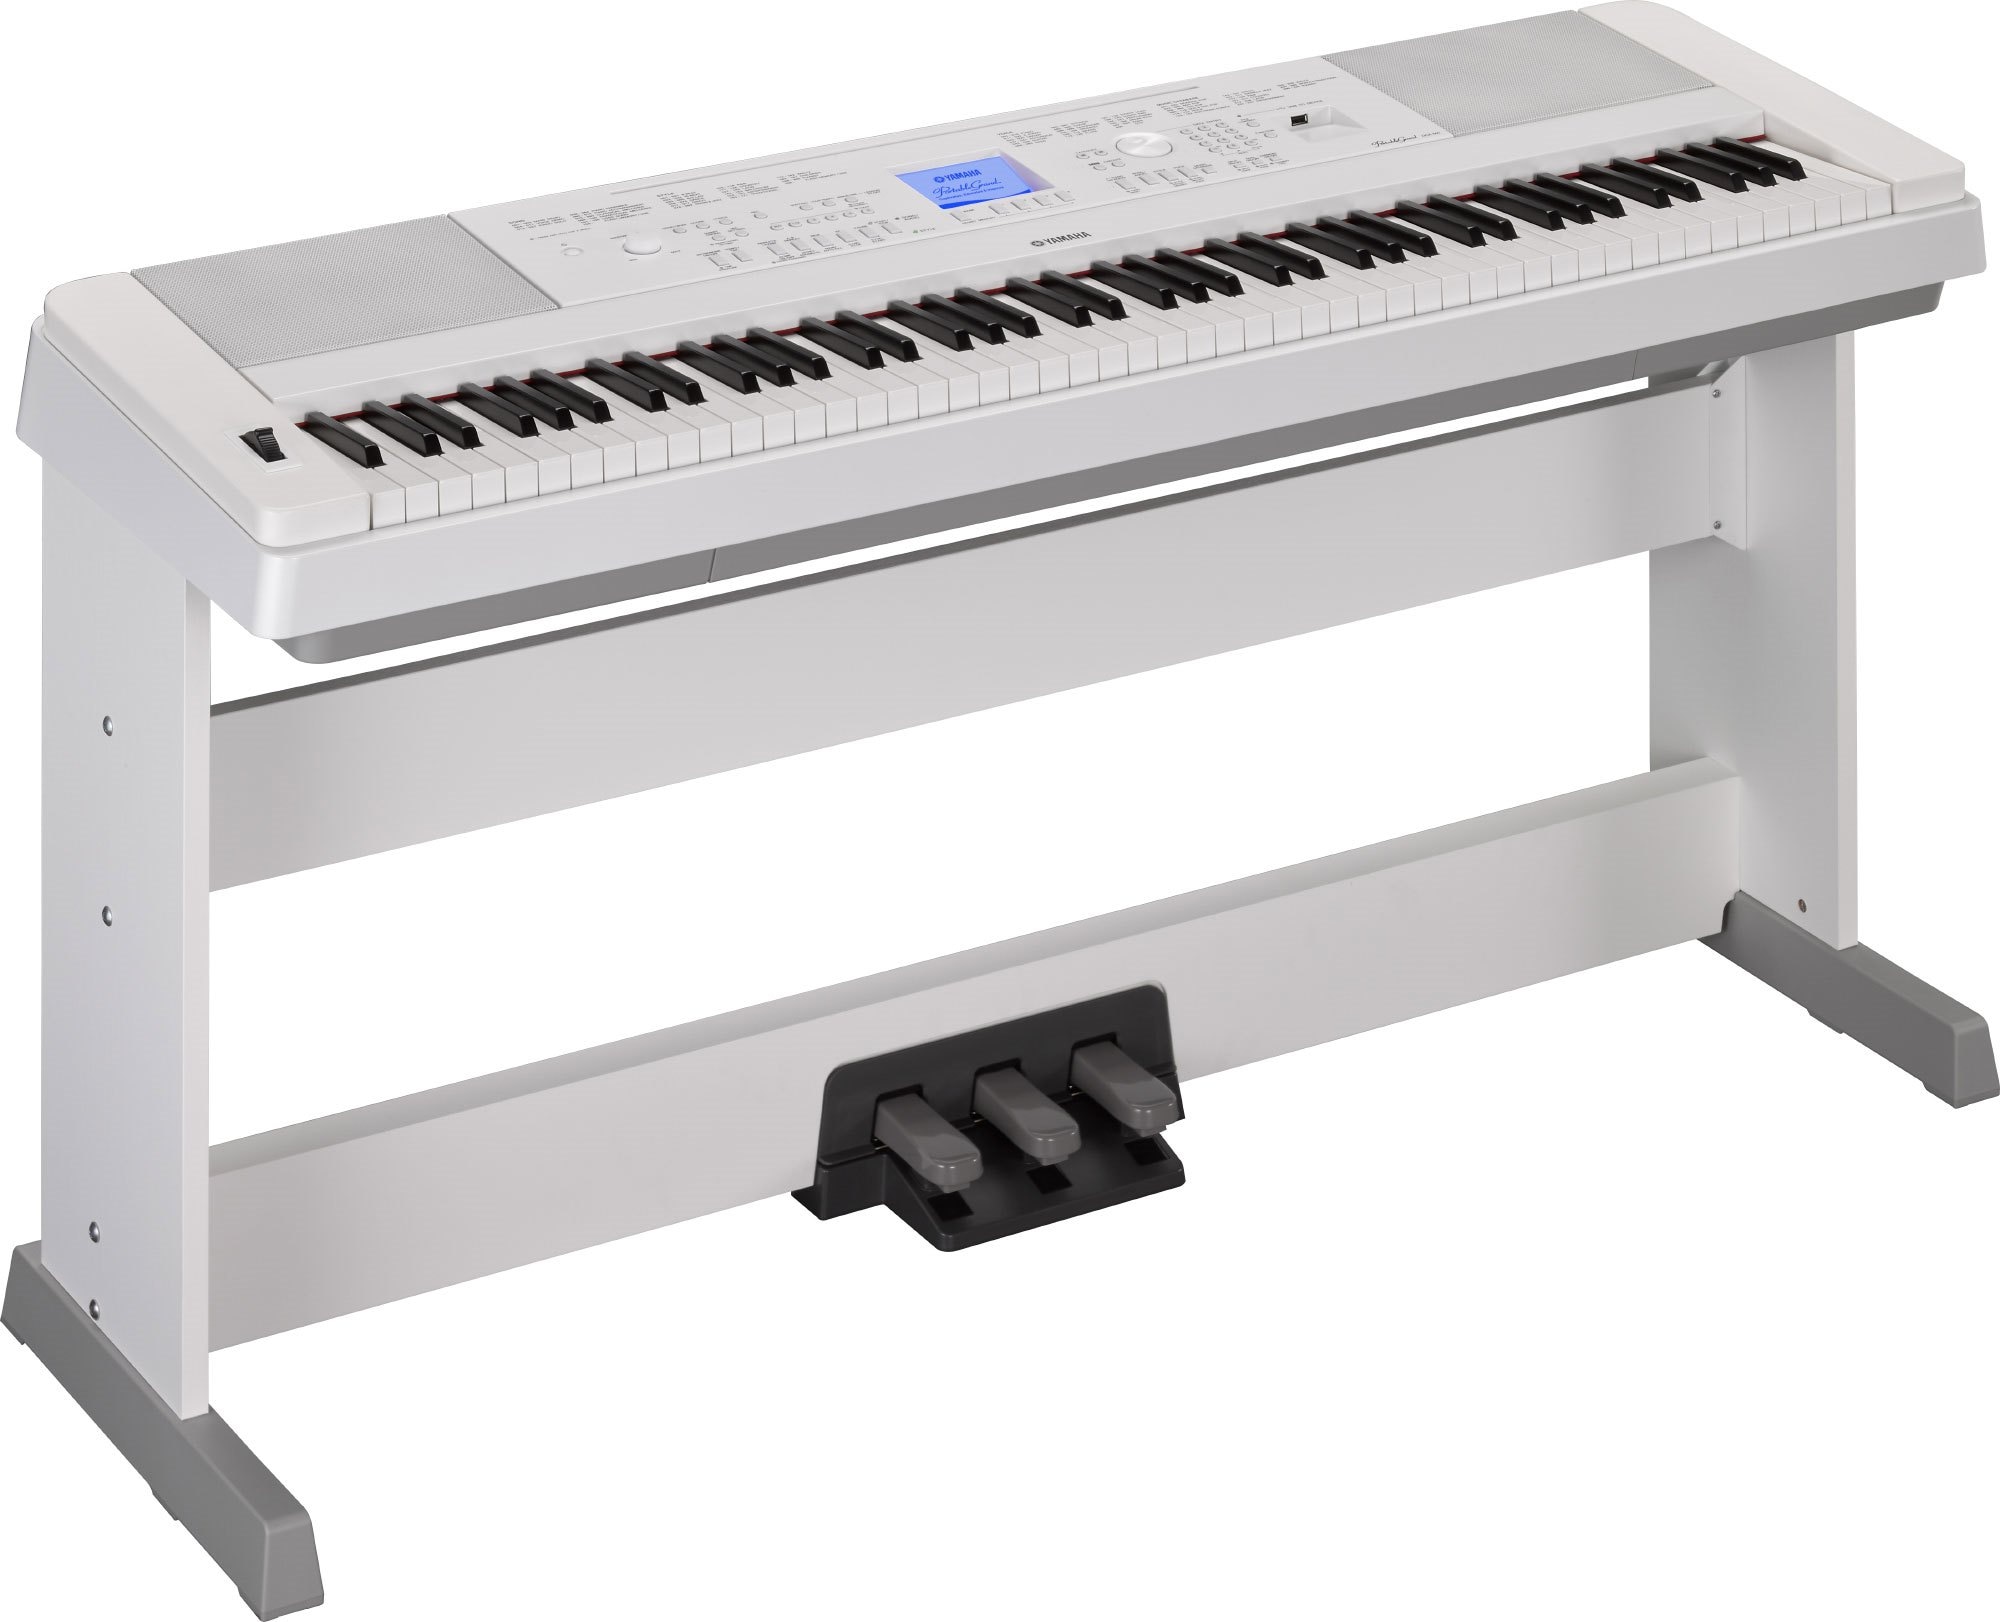 Yamaha Piano Keyboard Dust Cover DGX660 